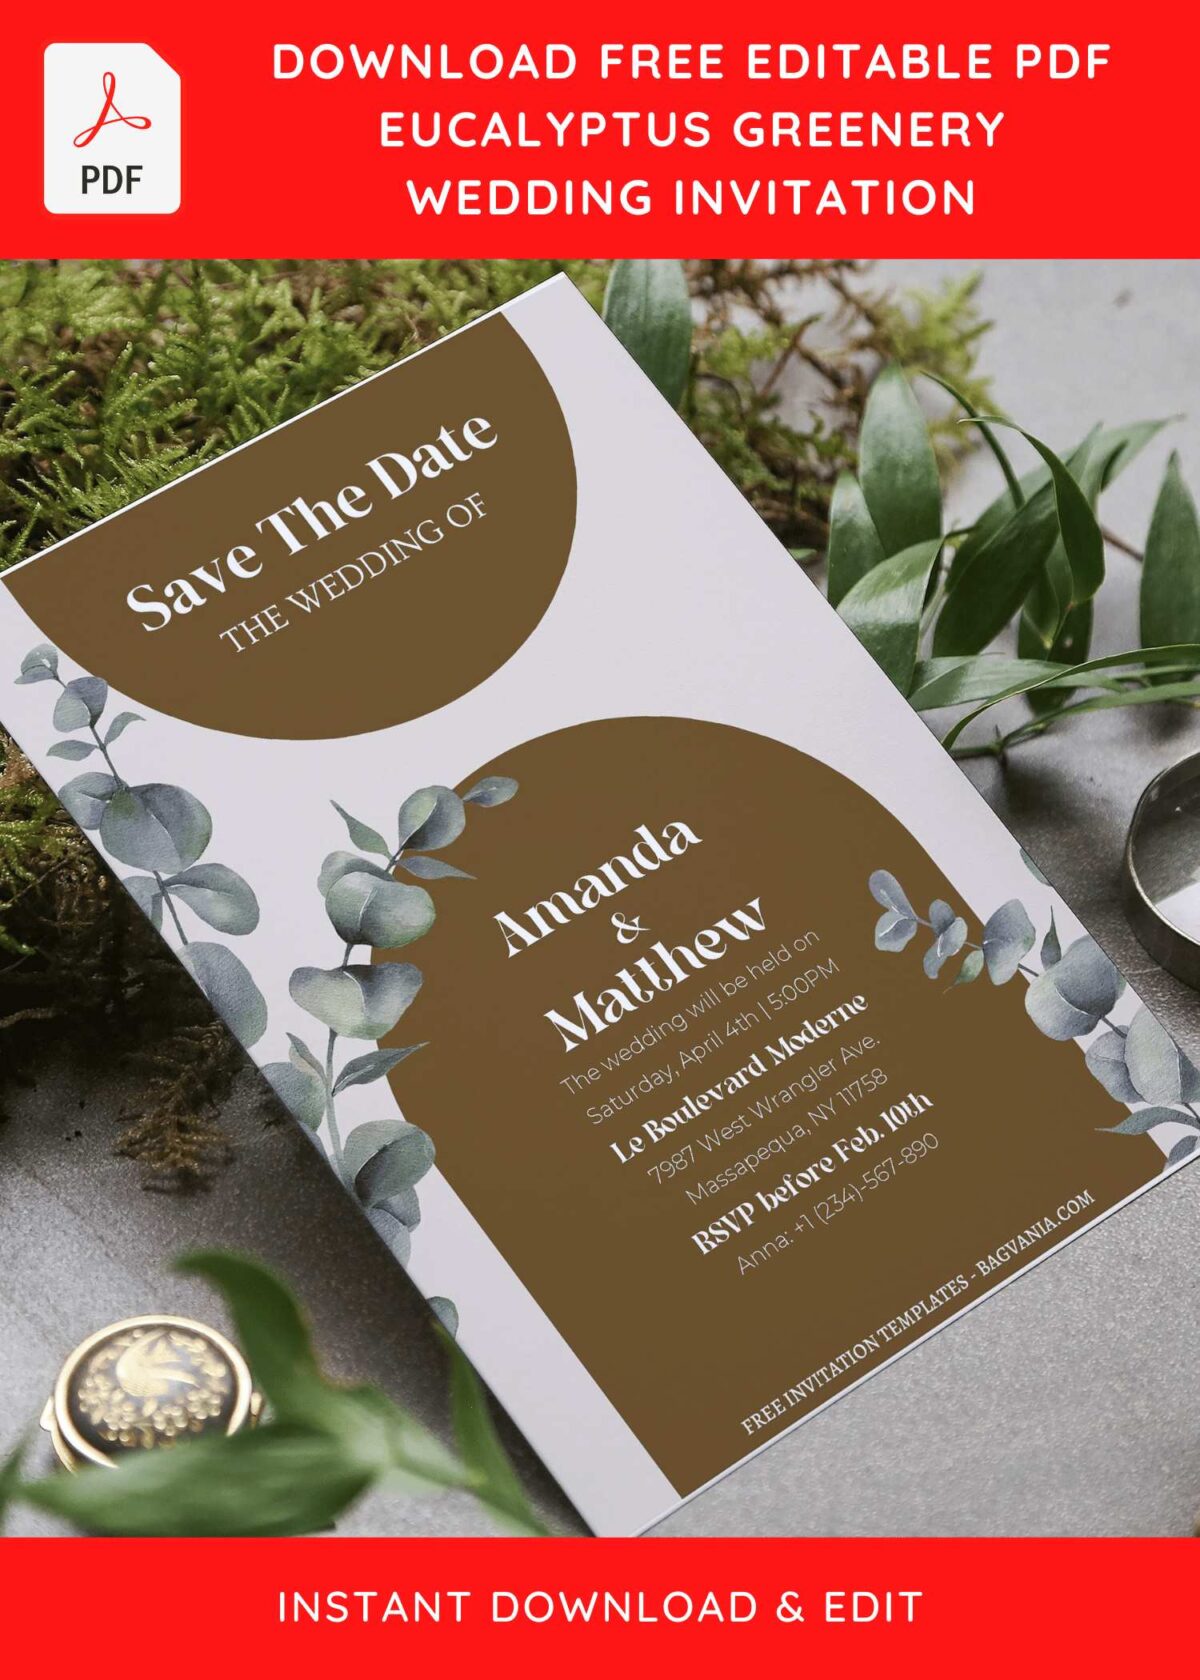 (Free Editable PDF) Modern Botanical Greenery Wedding Invitation Templates with aesthetic foliage leaf